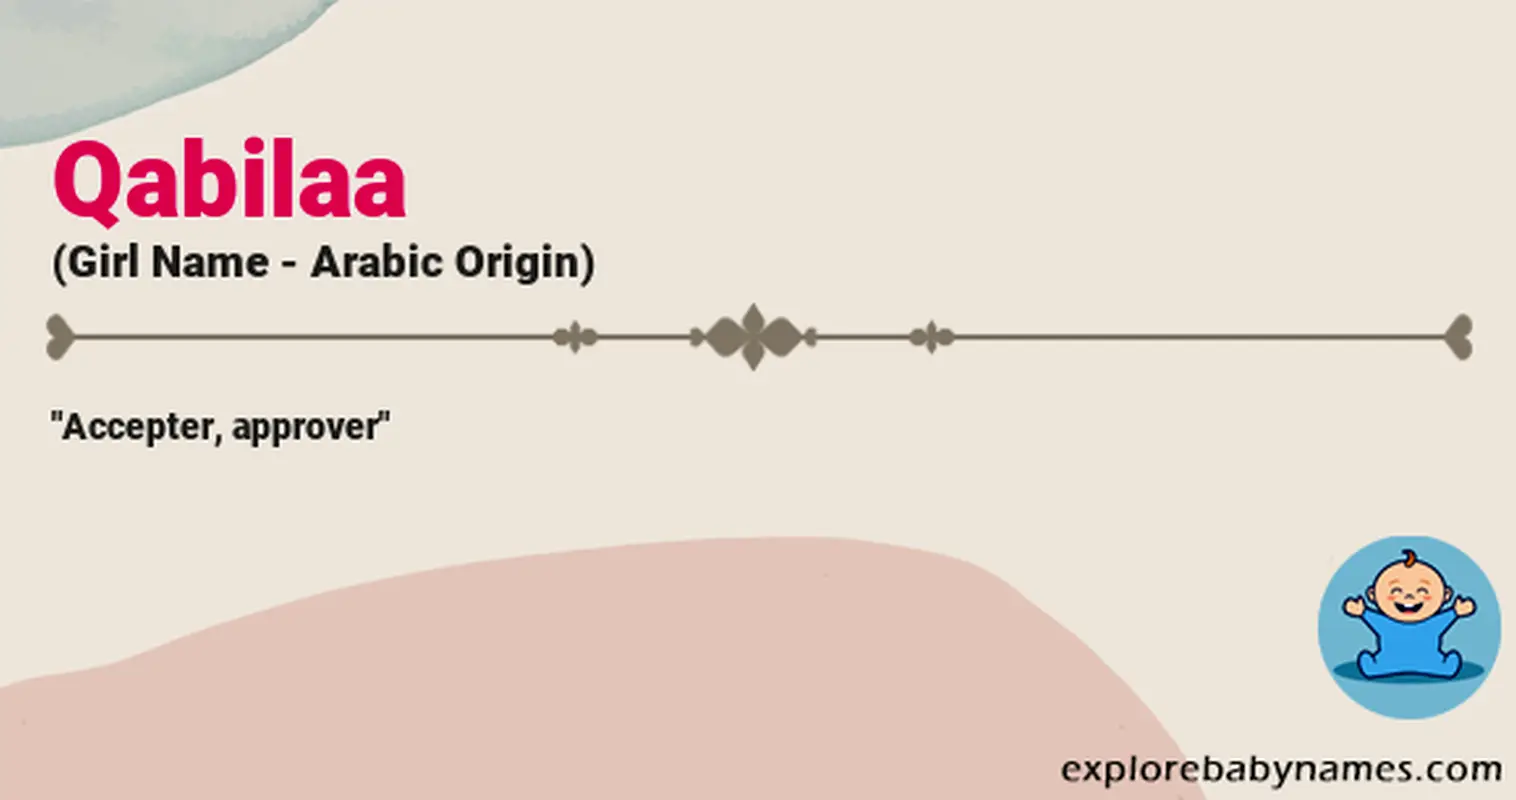 Meaning of Qabilaa